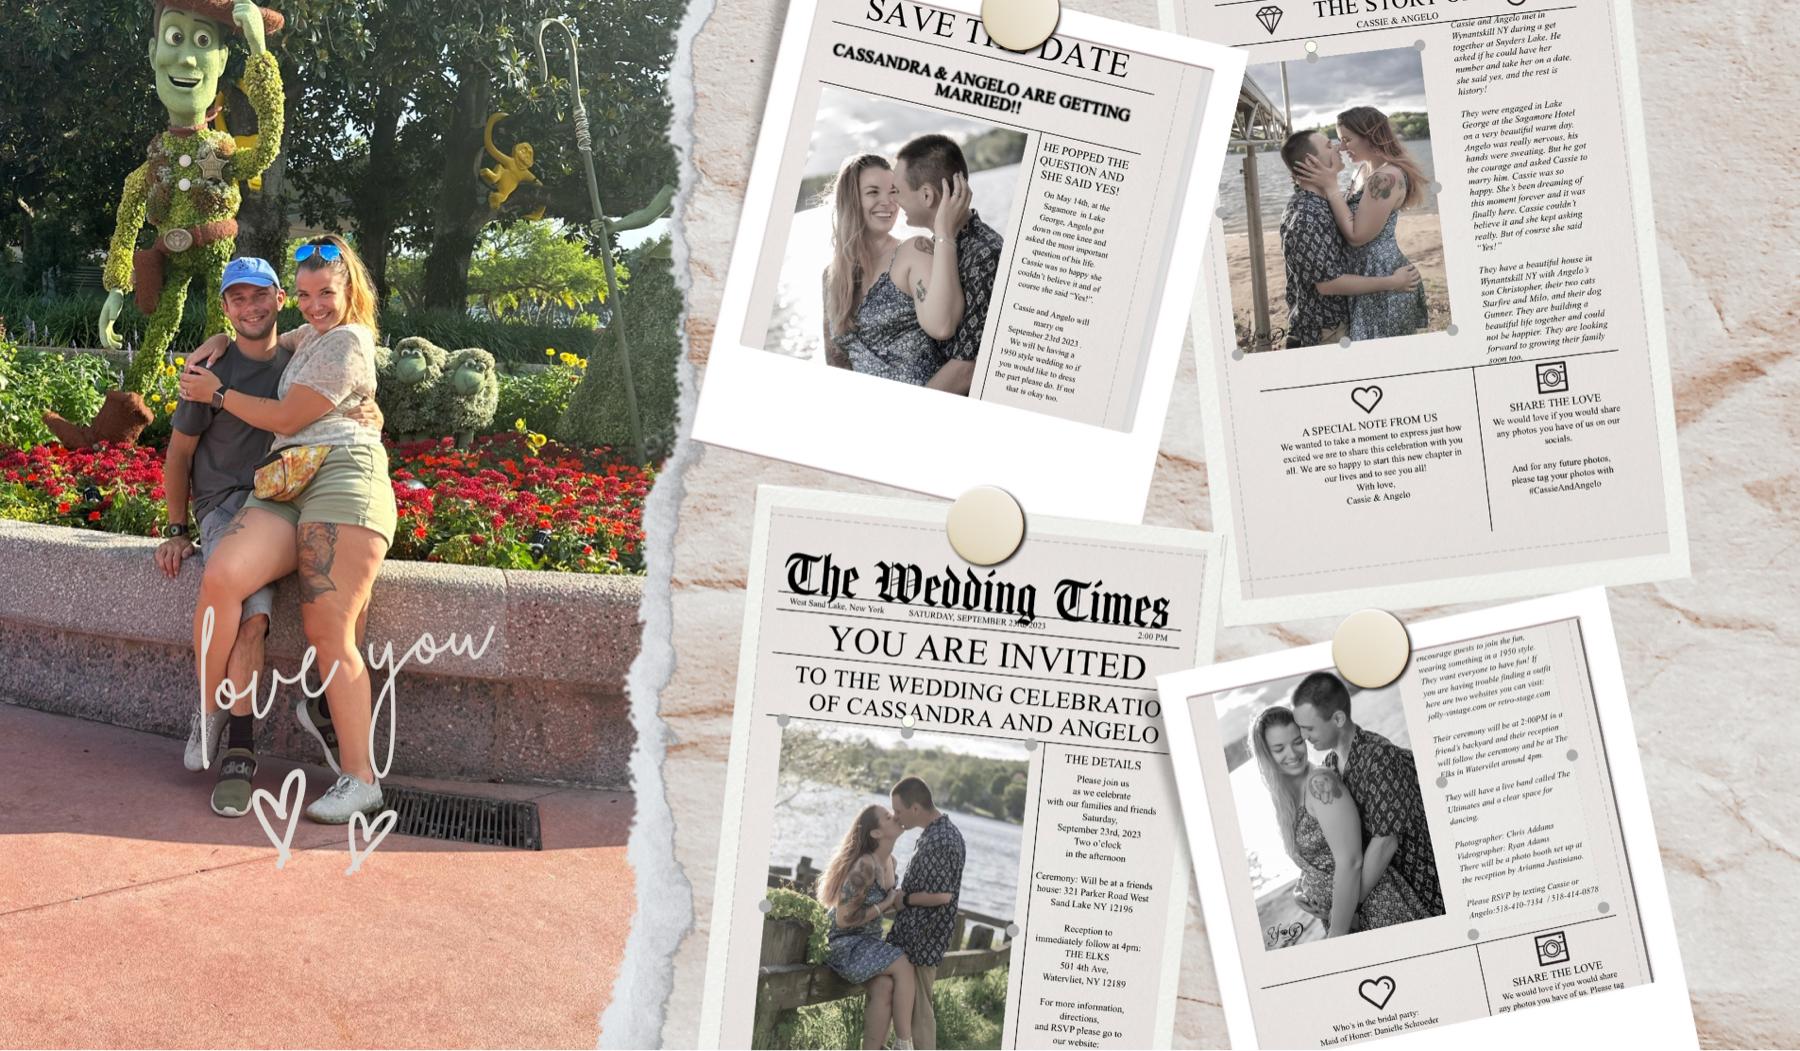 The Wedding Website of Cassandra Horton and Angelo Rosencrans